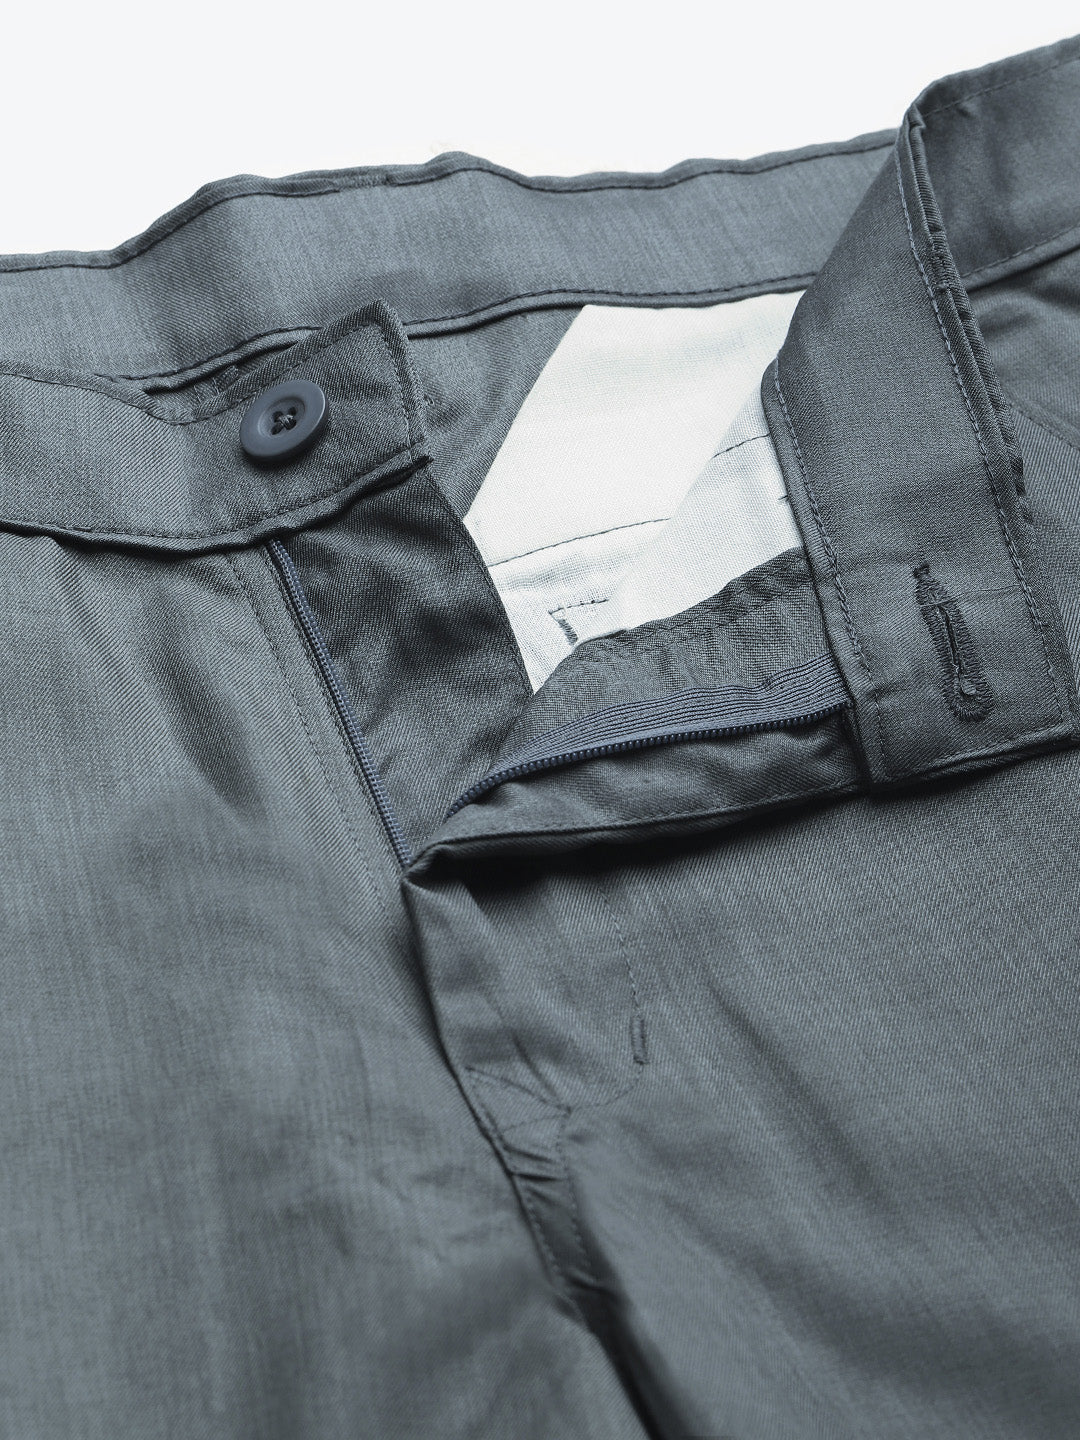 Men's Cotton Blend Charcoal grey Solid Trouser - Sojanya